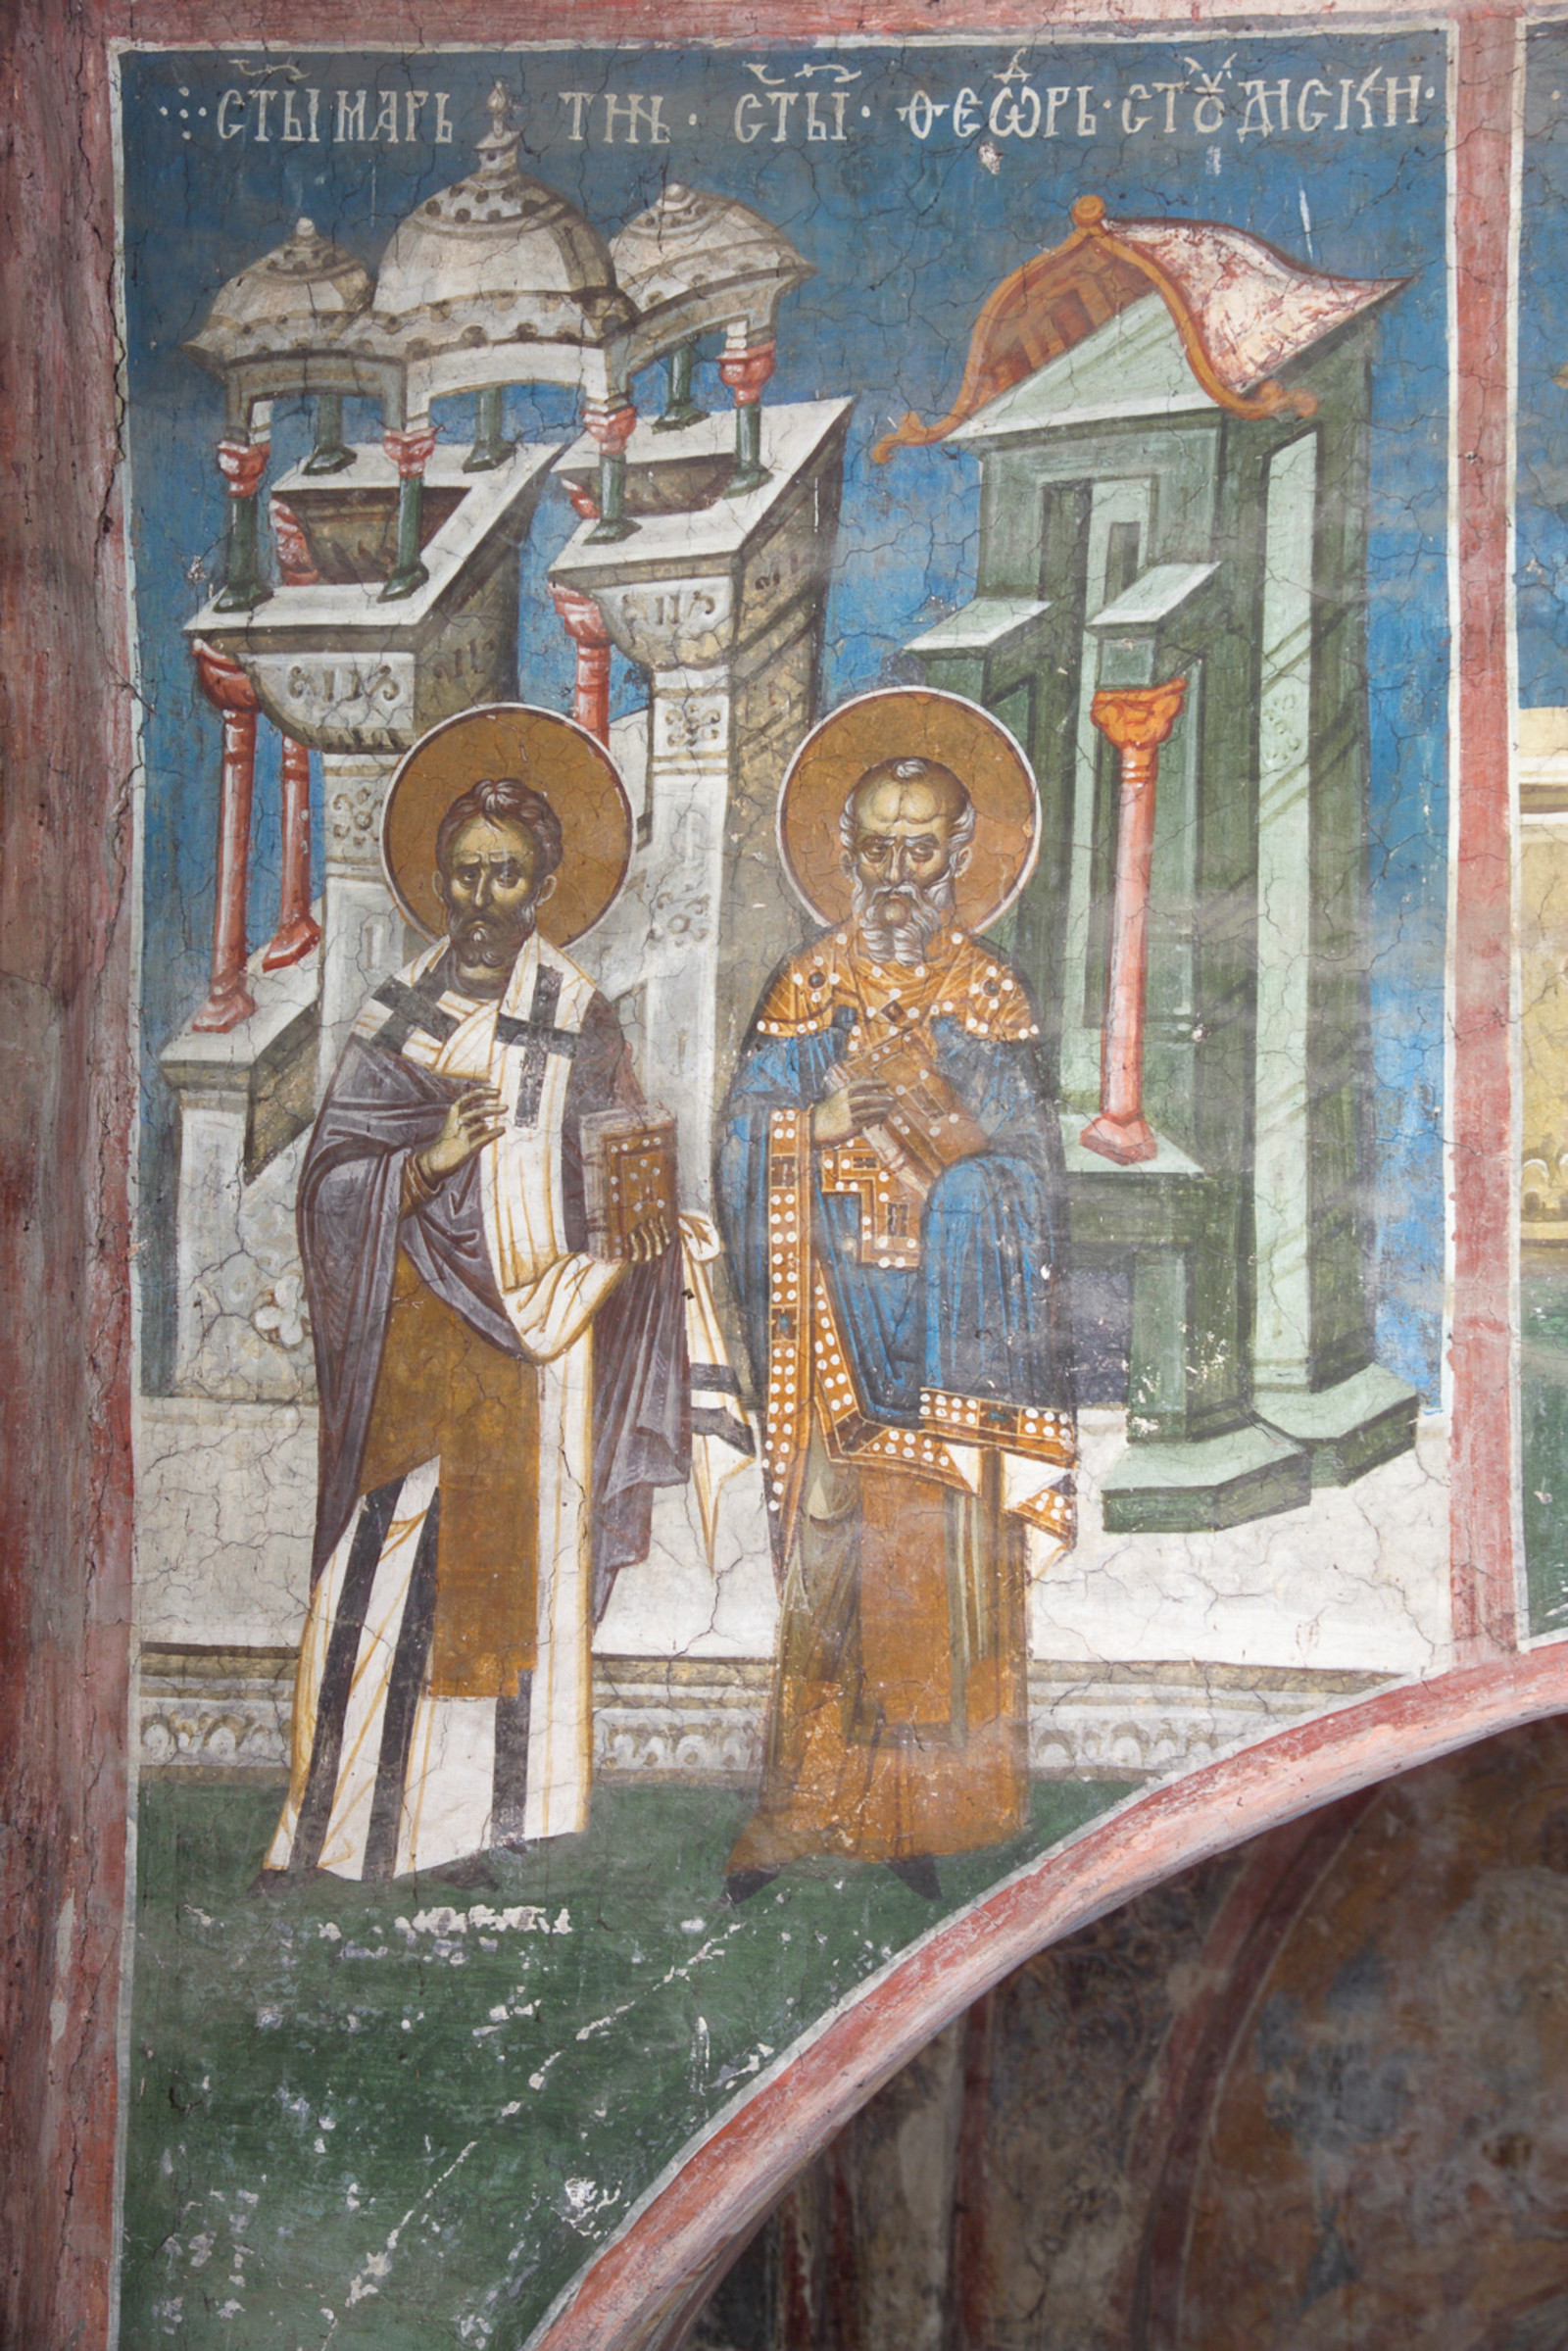 7II-20 November 11 - St. Martin and St. Theodore Studites (figures)